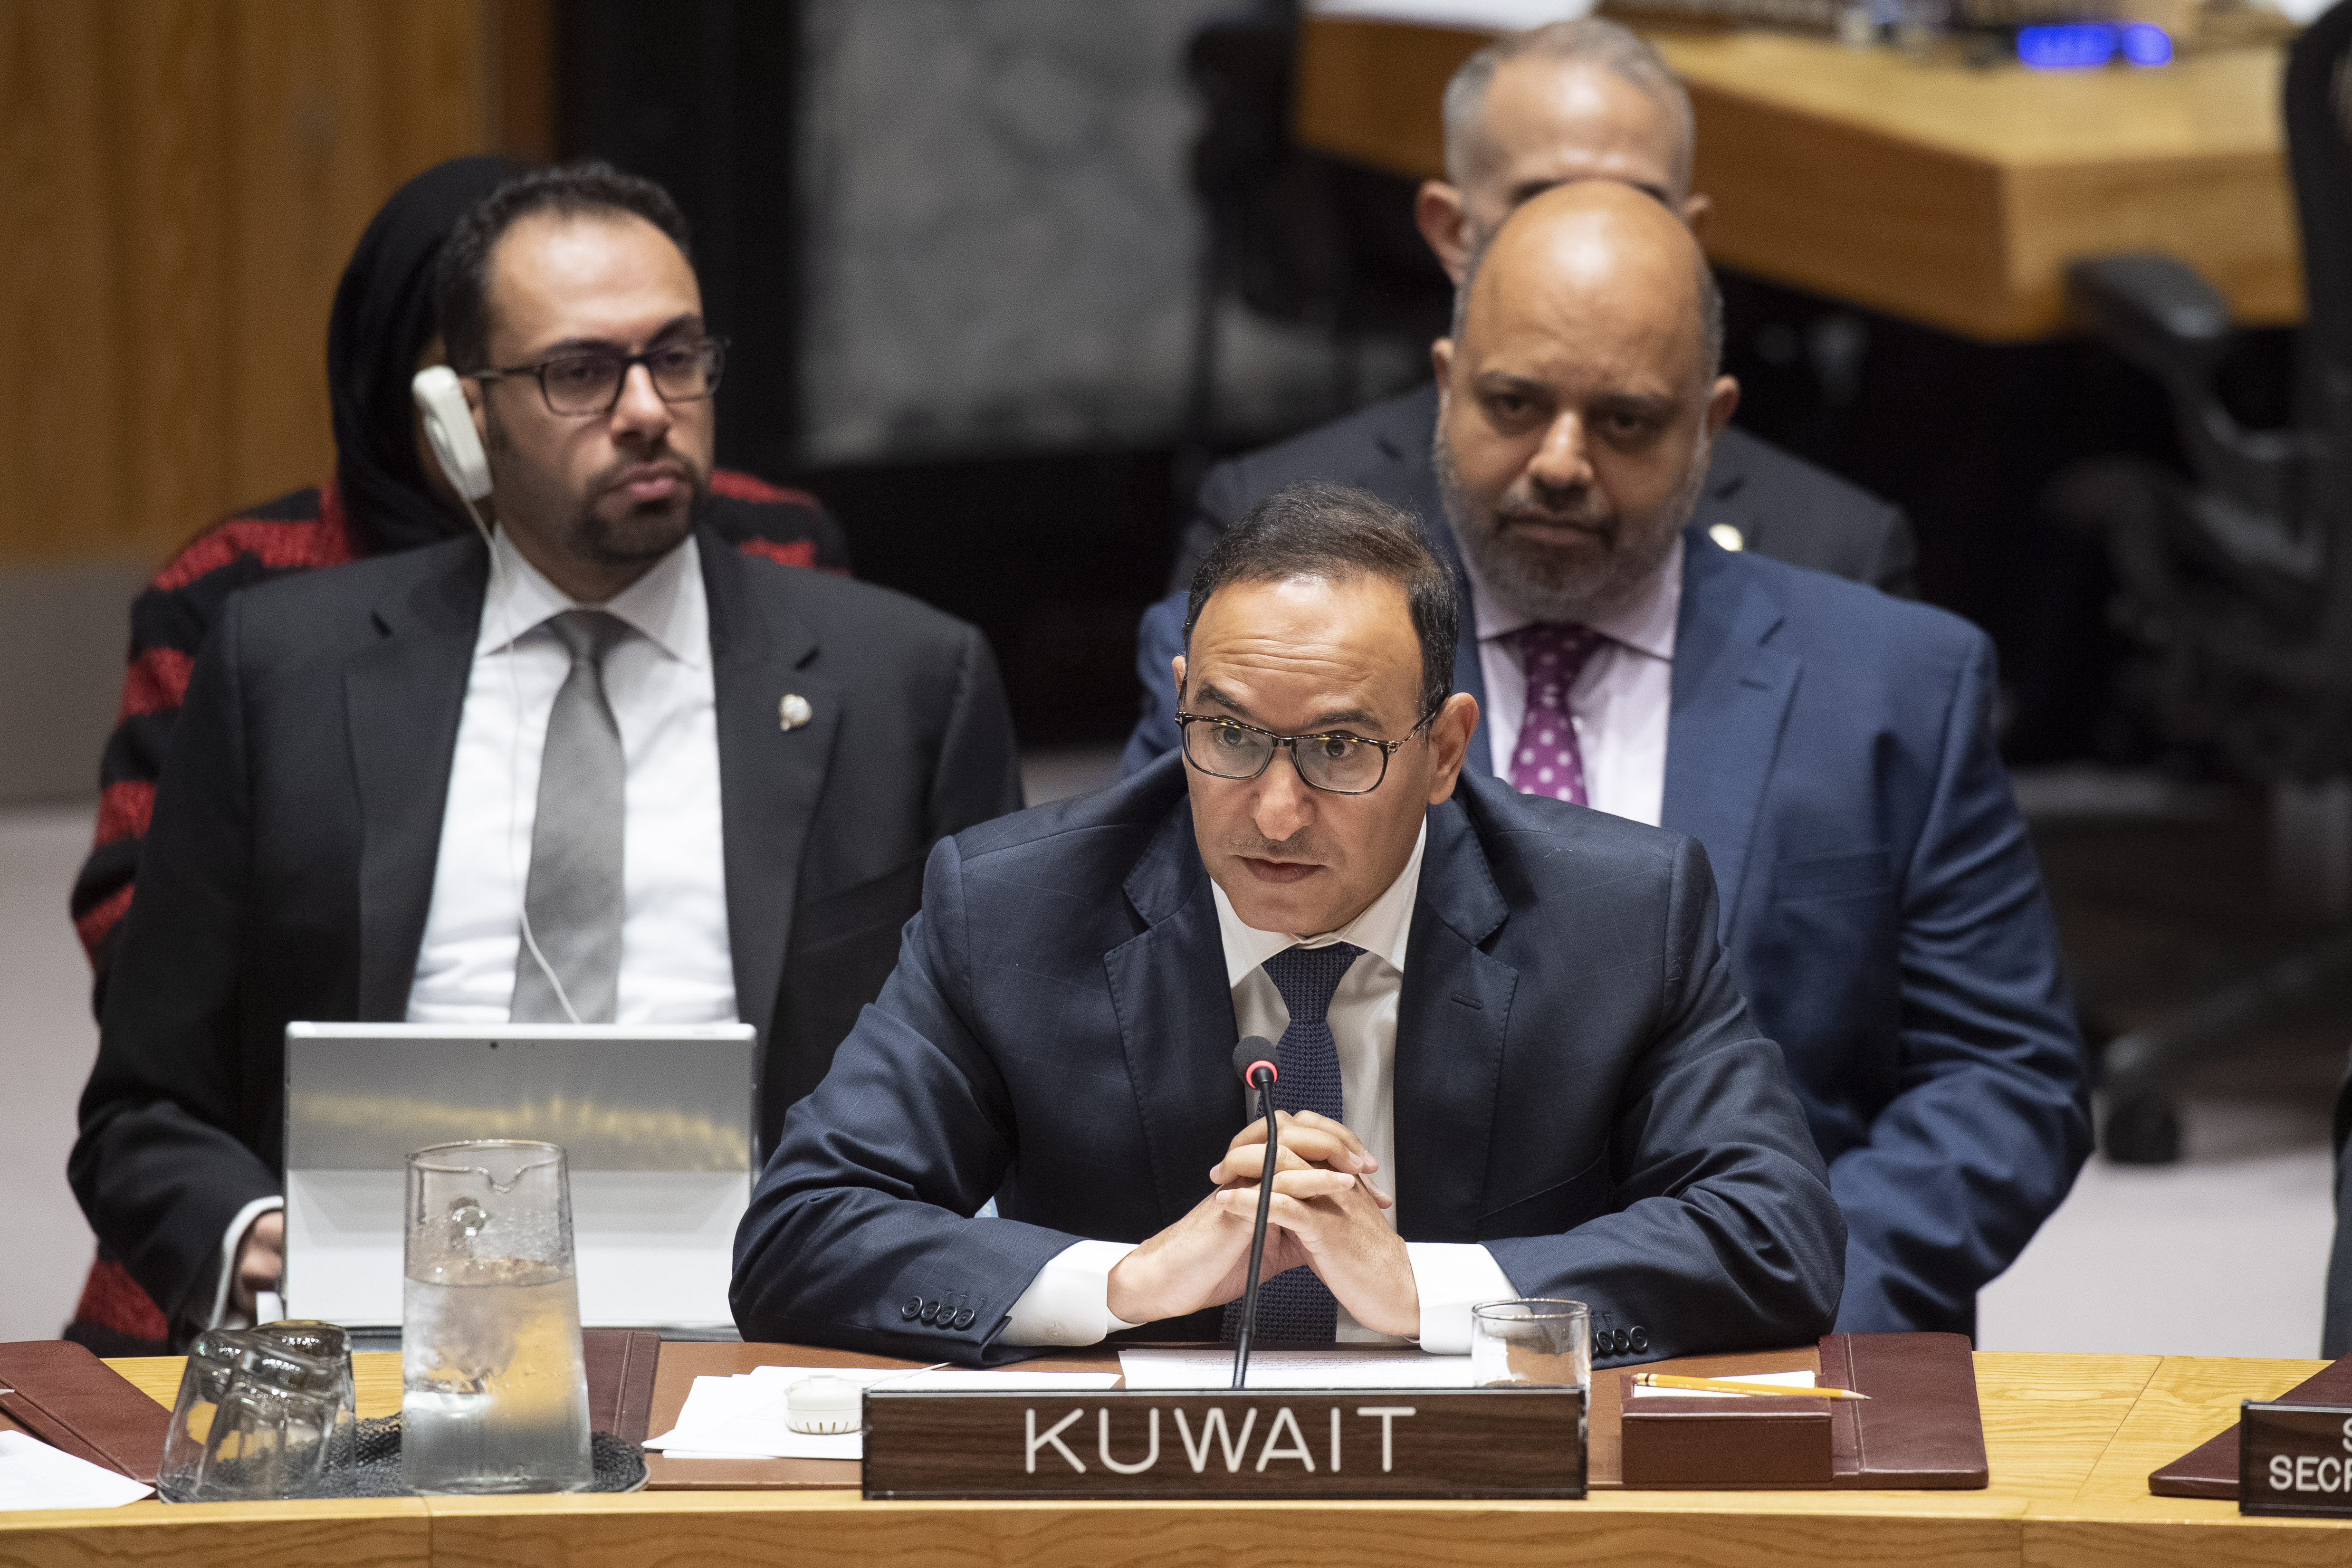 Kuwait's Permanent Representative to the UN headquarters in New York Ambassador Mansour Al-Otaibi